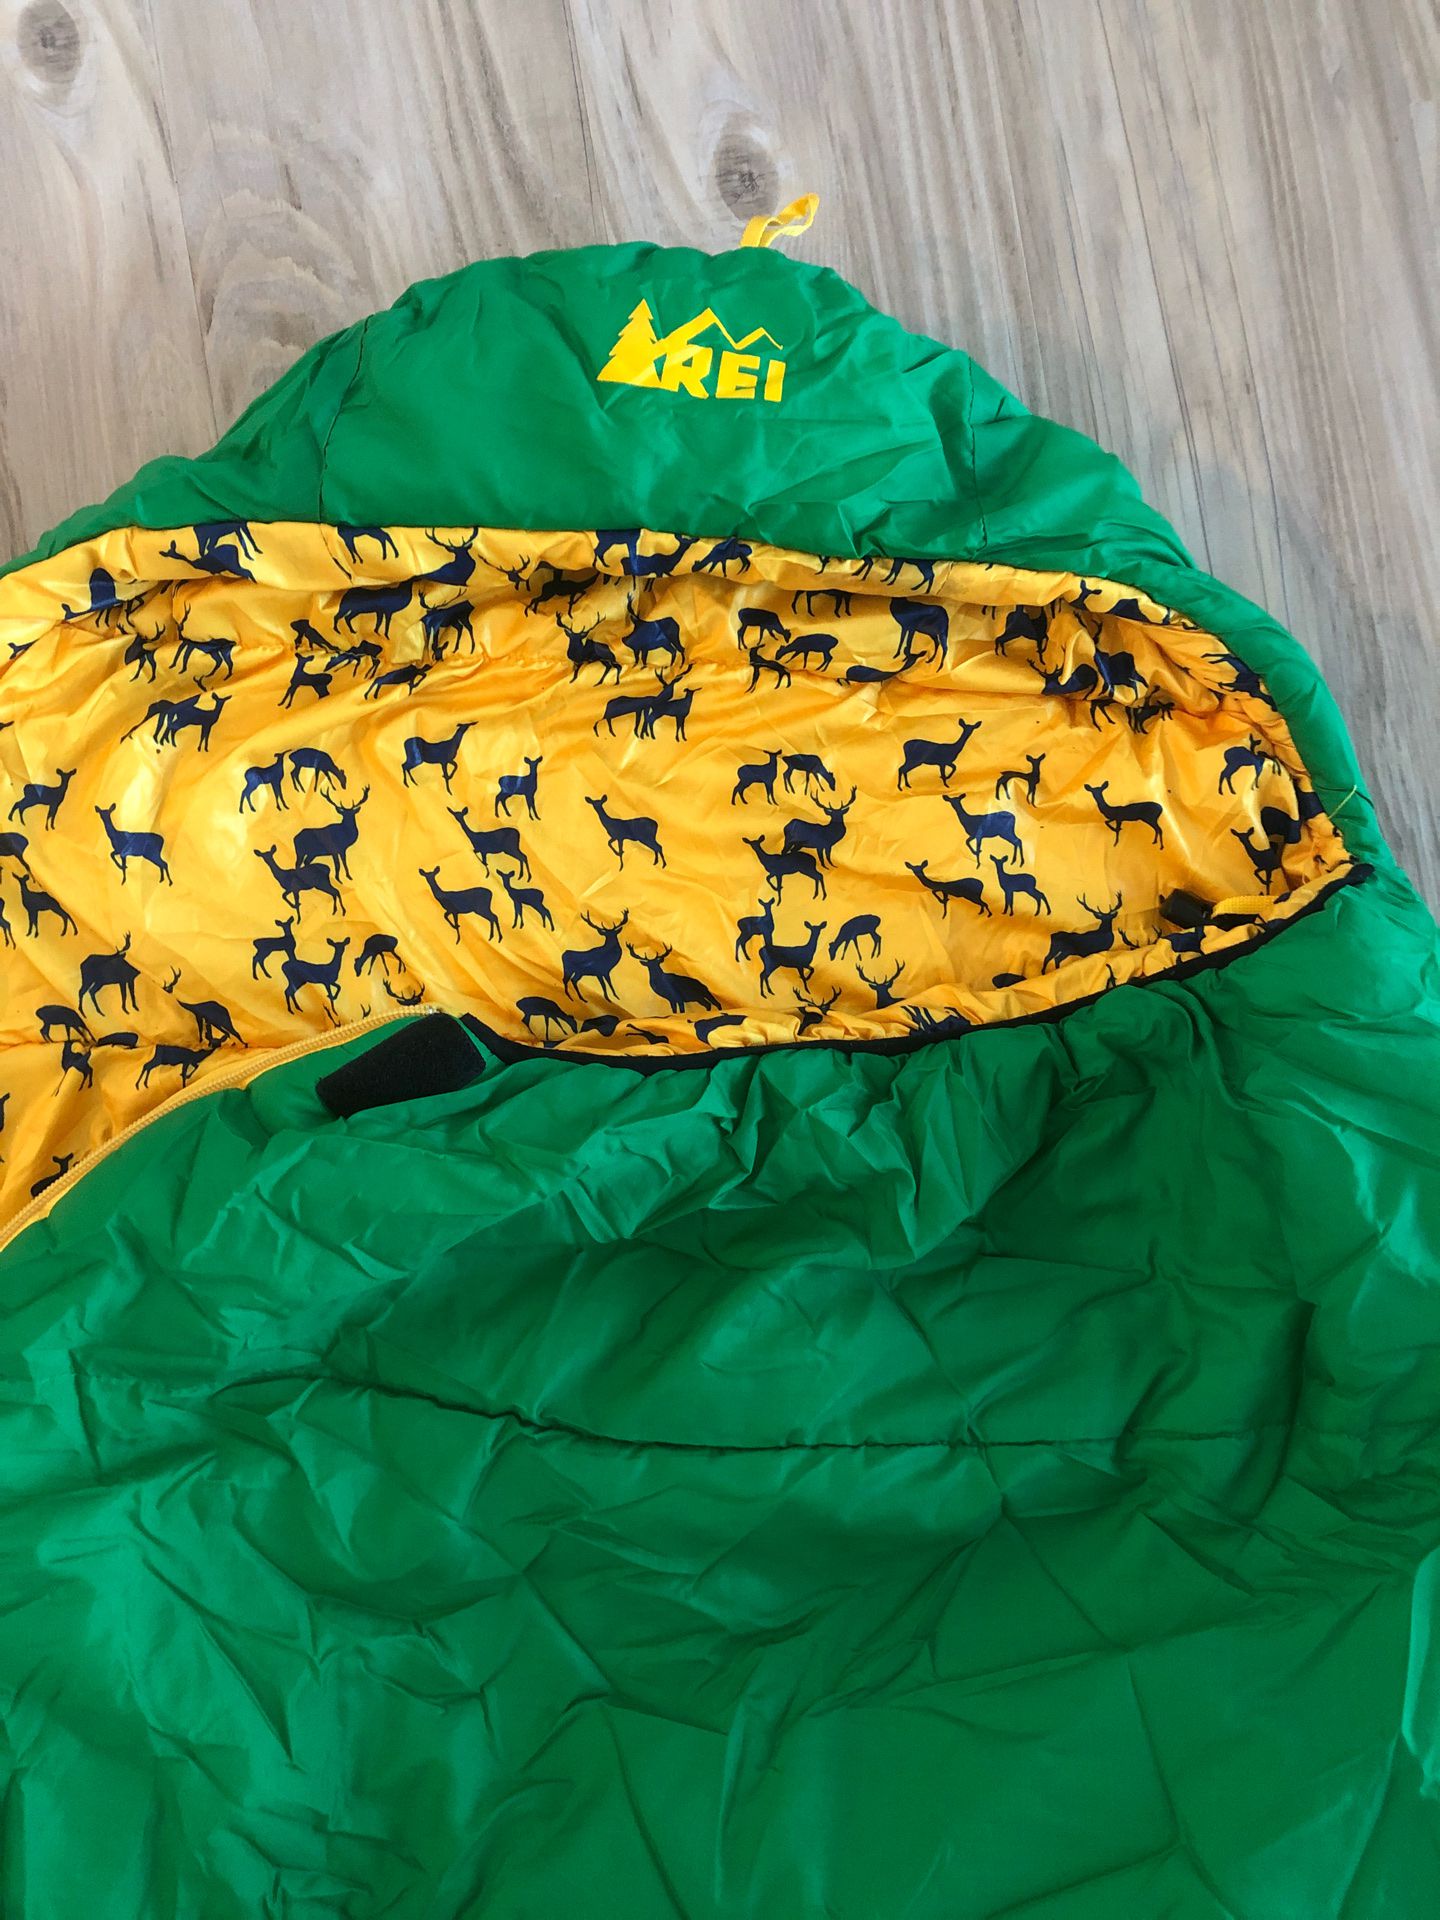 REI kindercone youth sleeping bag unisex green yellow deers